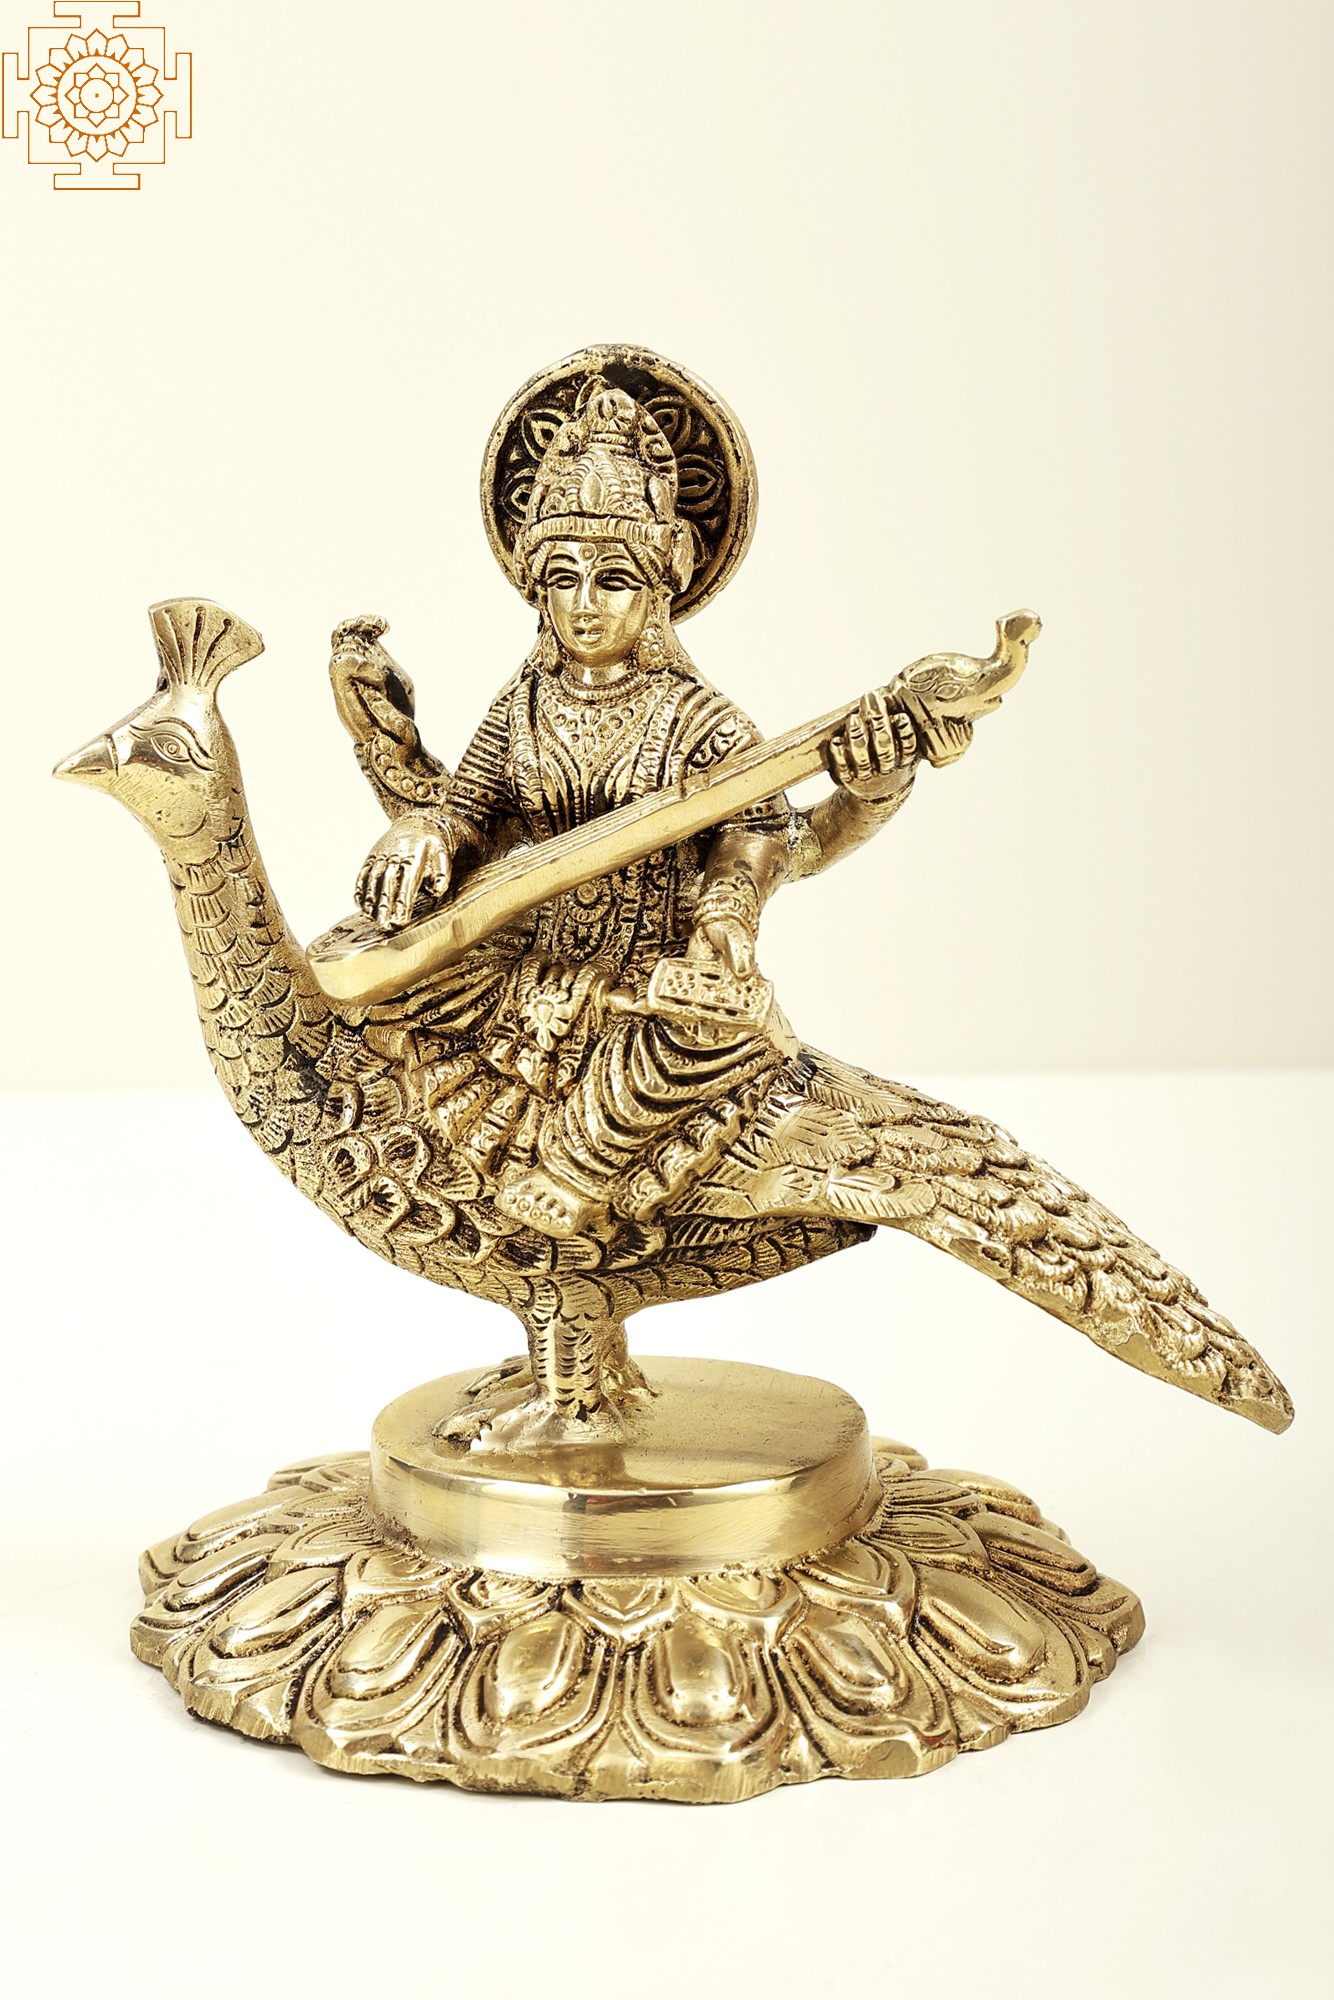 7 Gooddess Saraswati Seated On Peacock With Veena Brass Goddess Saraswati Brass Statue 